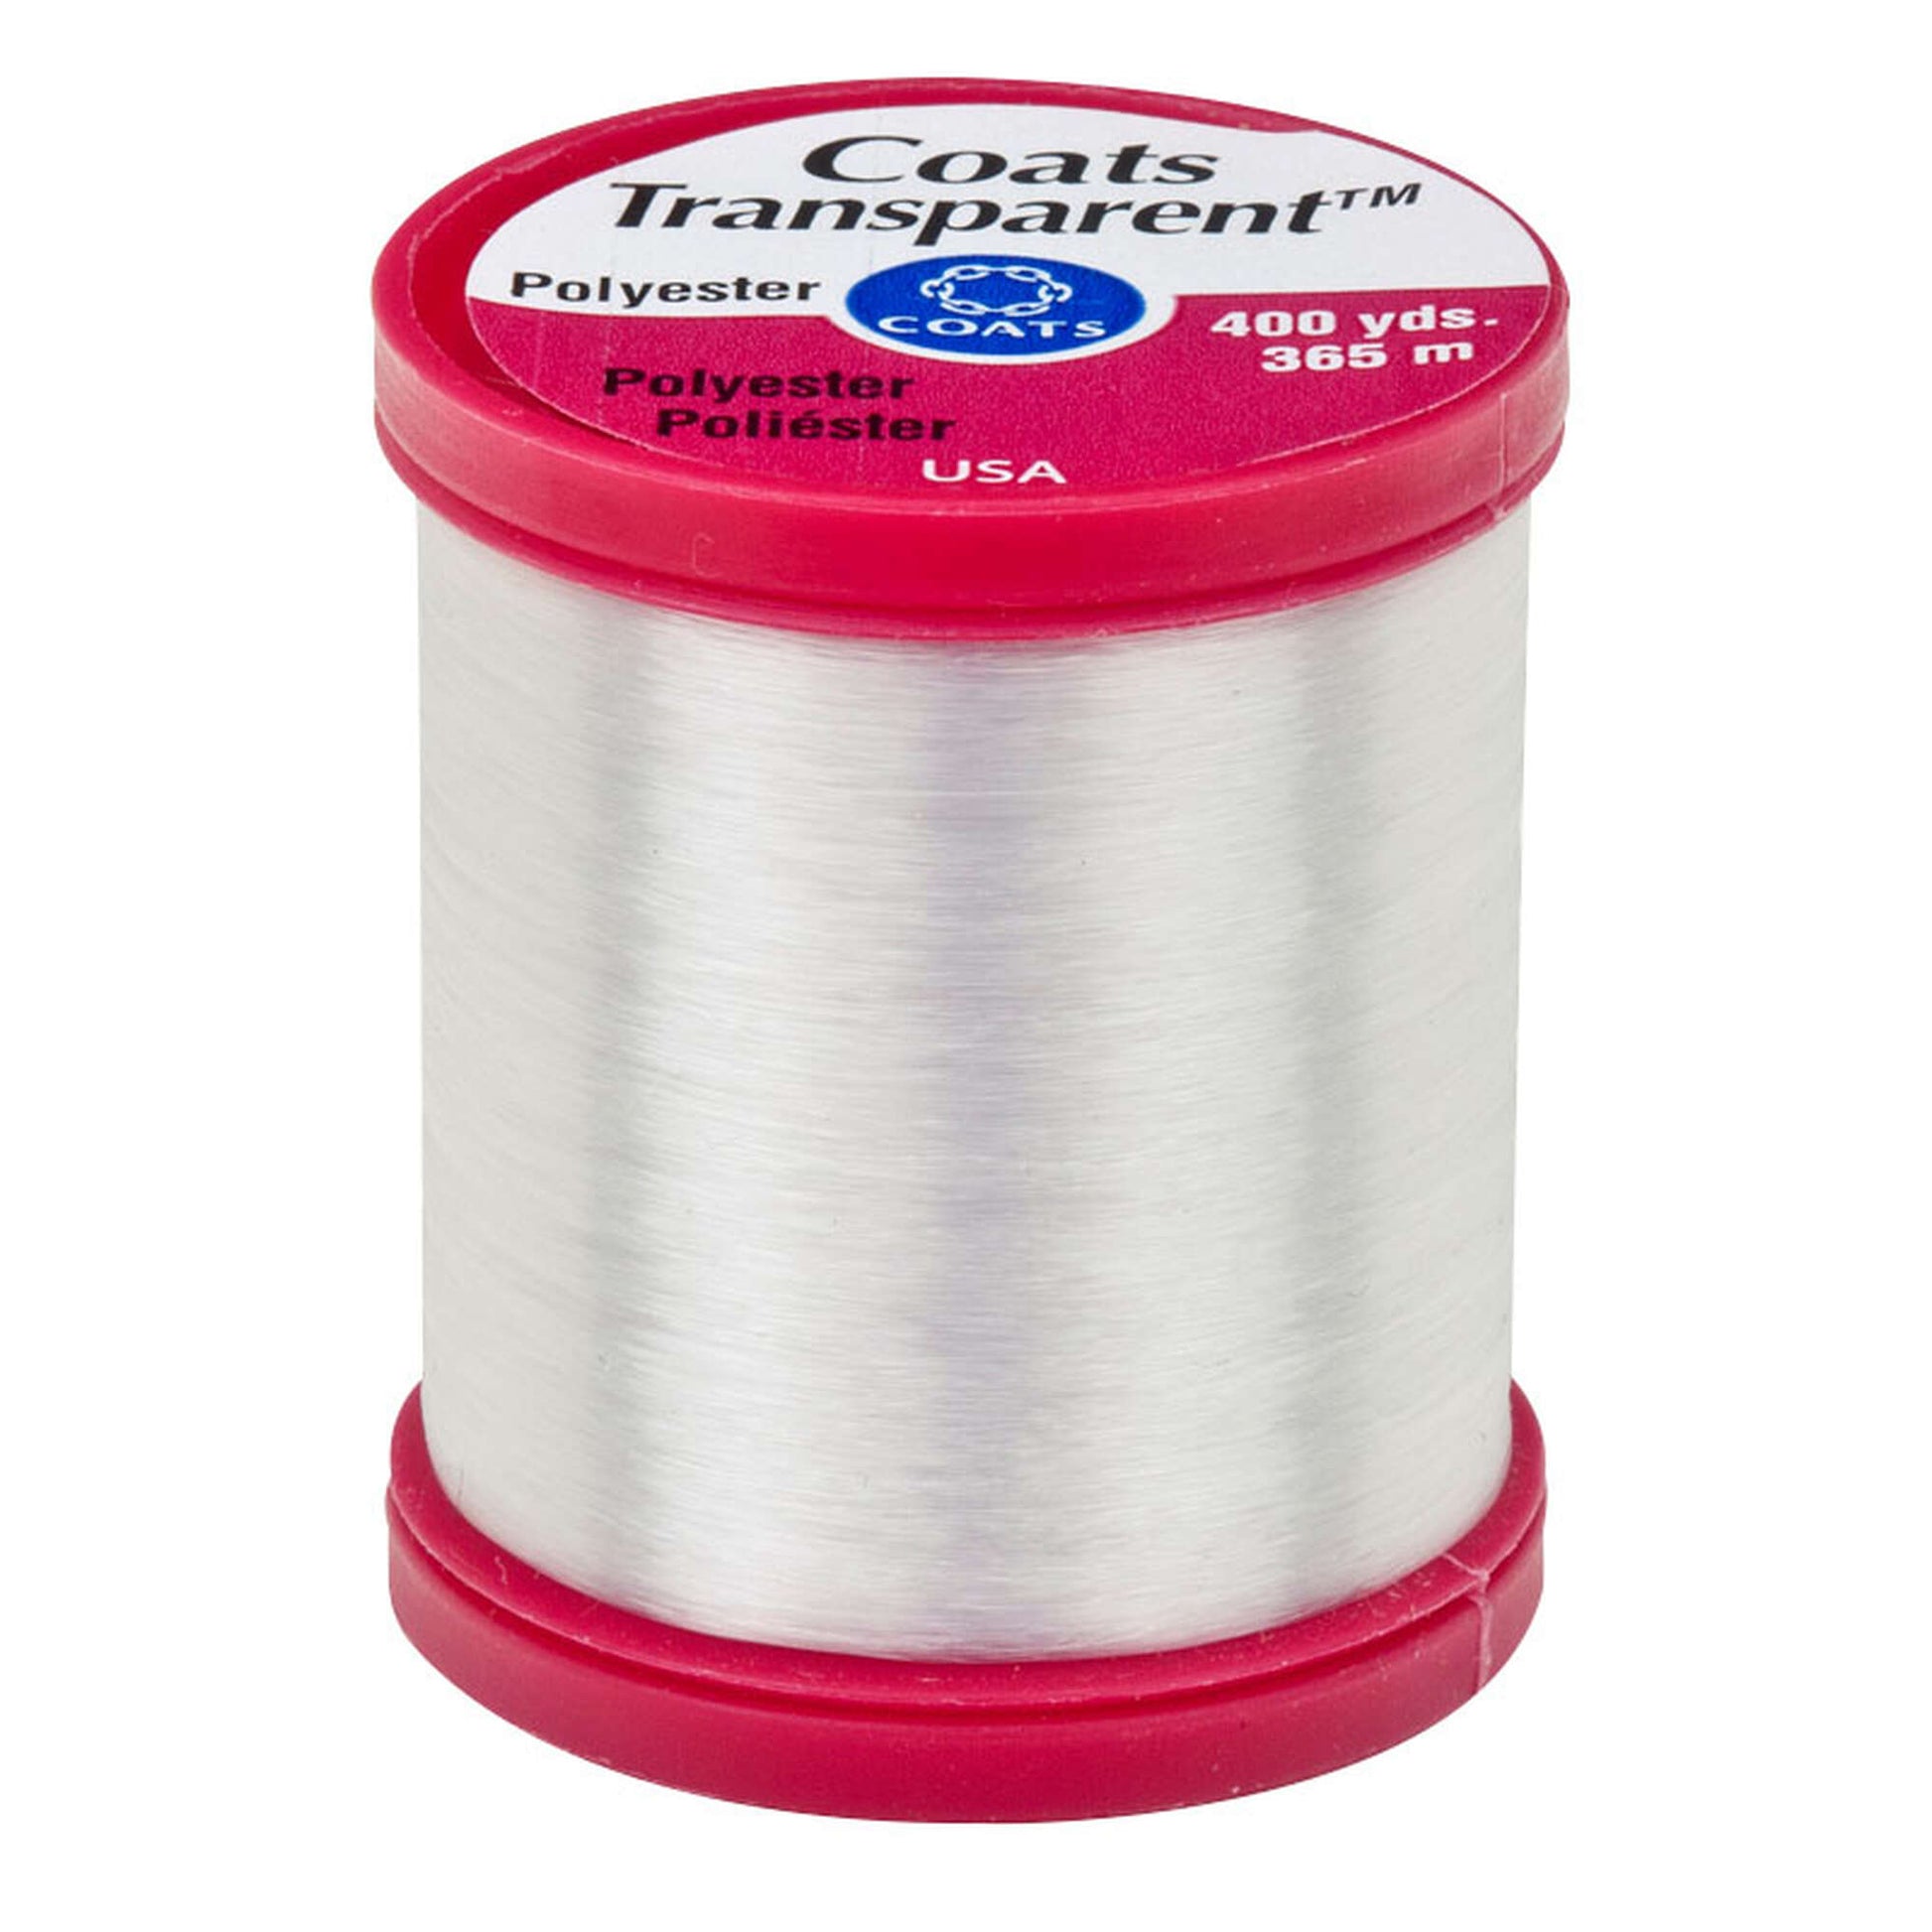 Coats & Clark Transparent Thread (400 Yards)